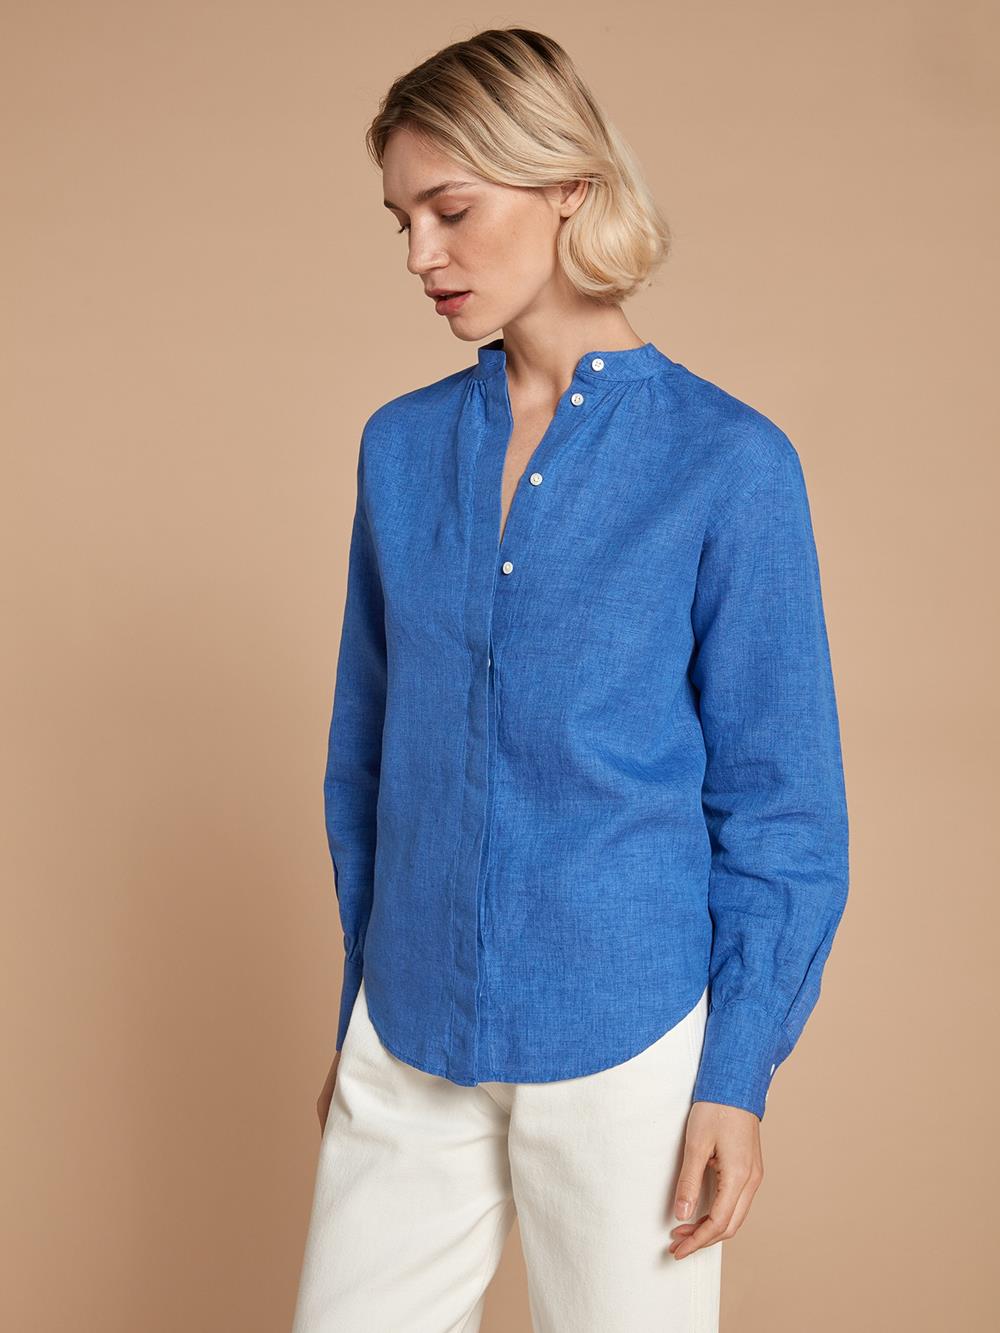 Palma Seraphine blue shirt